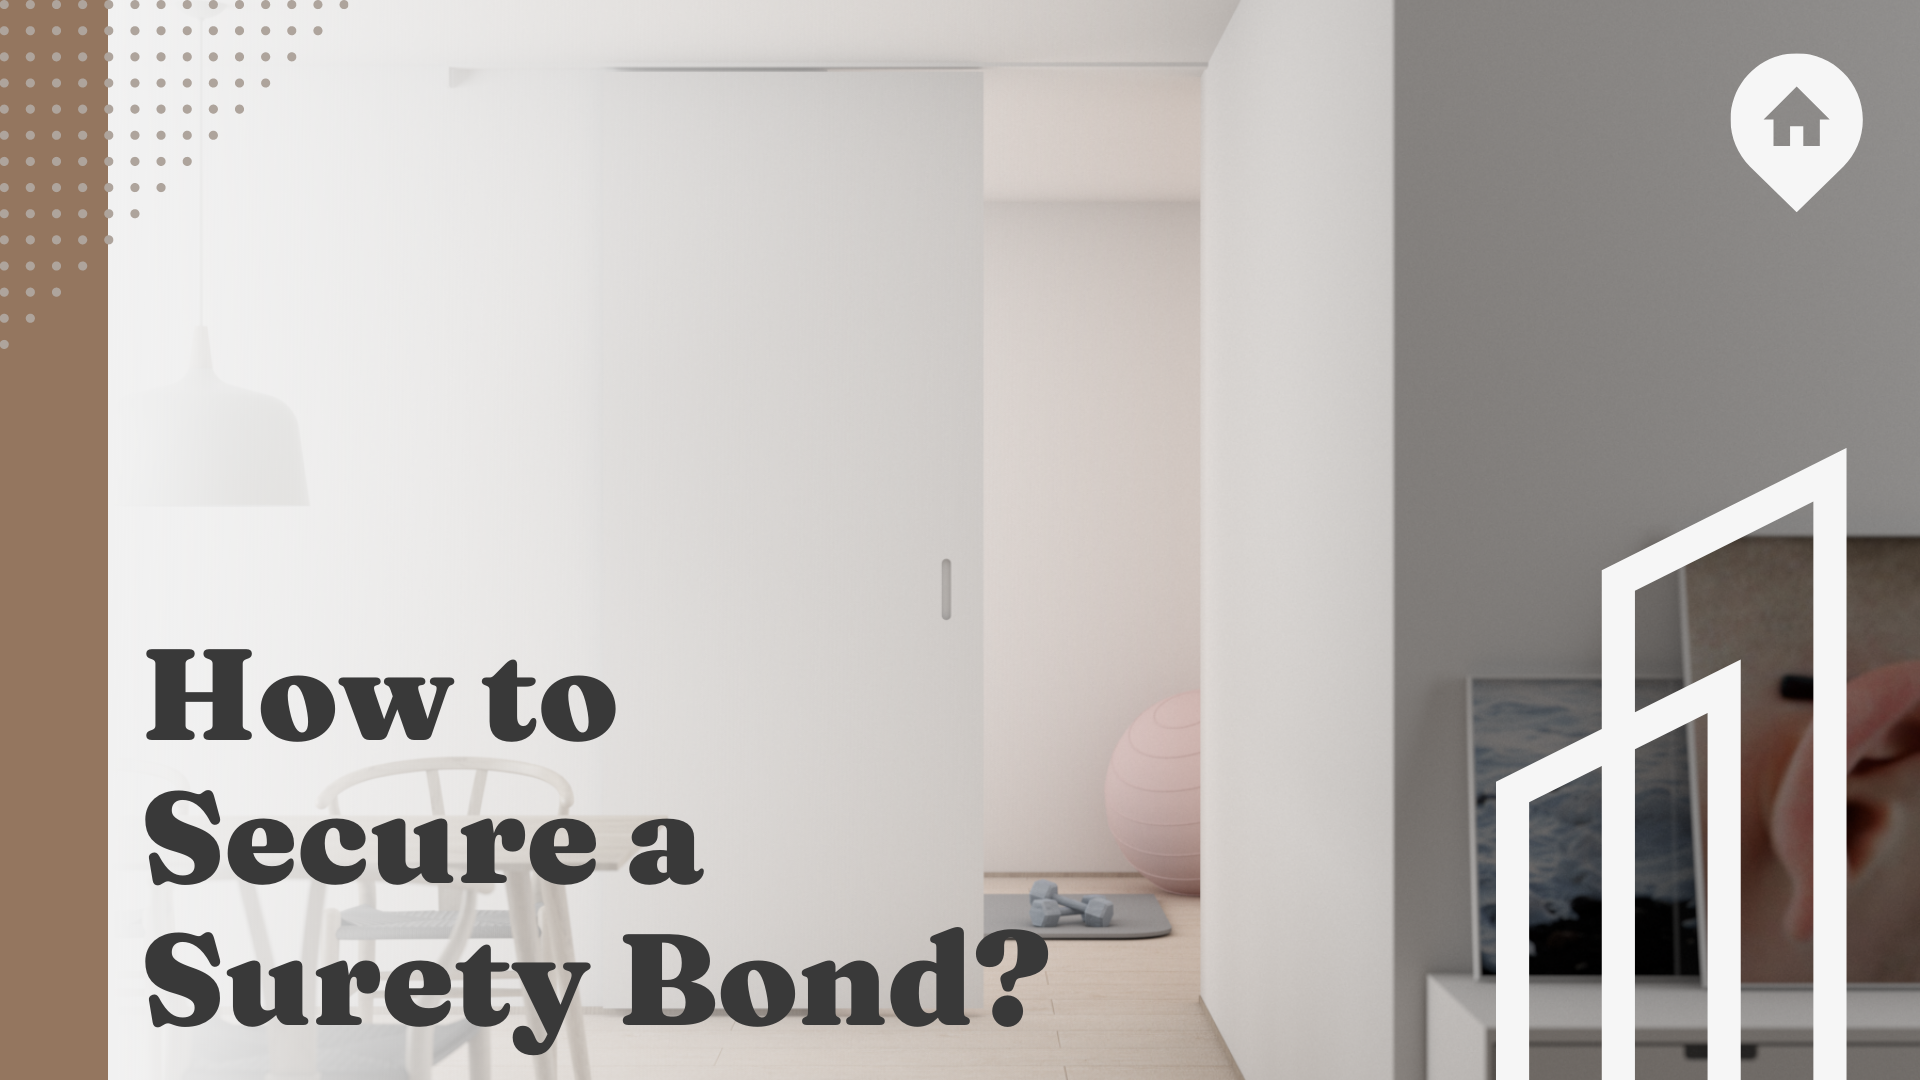 surety bond - What are my options for obtaining a surety bond - minimalism